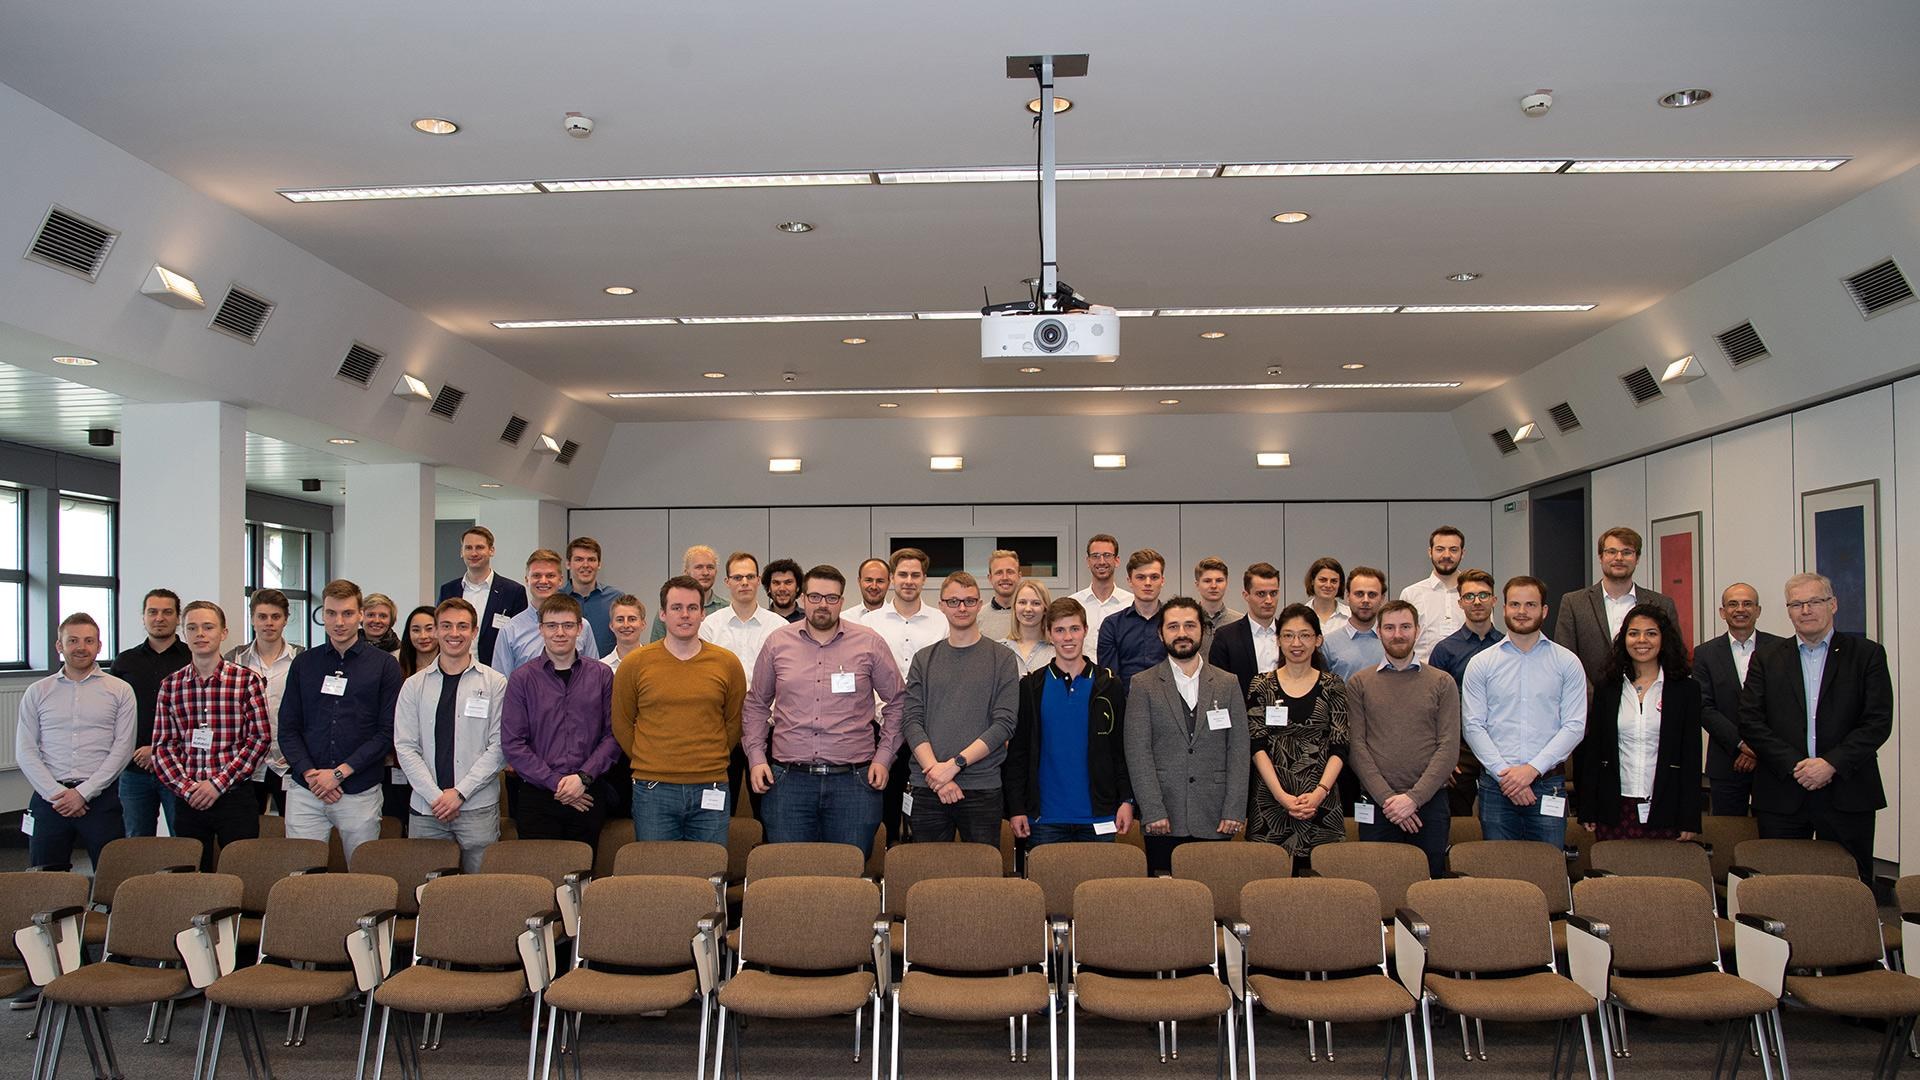 Participants in the DLR/NASA Design Challenge 2019